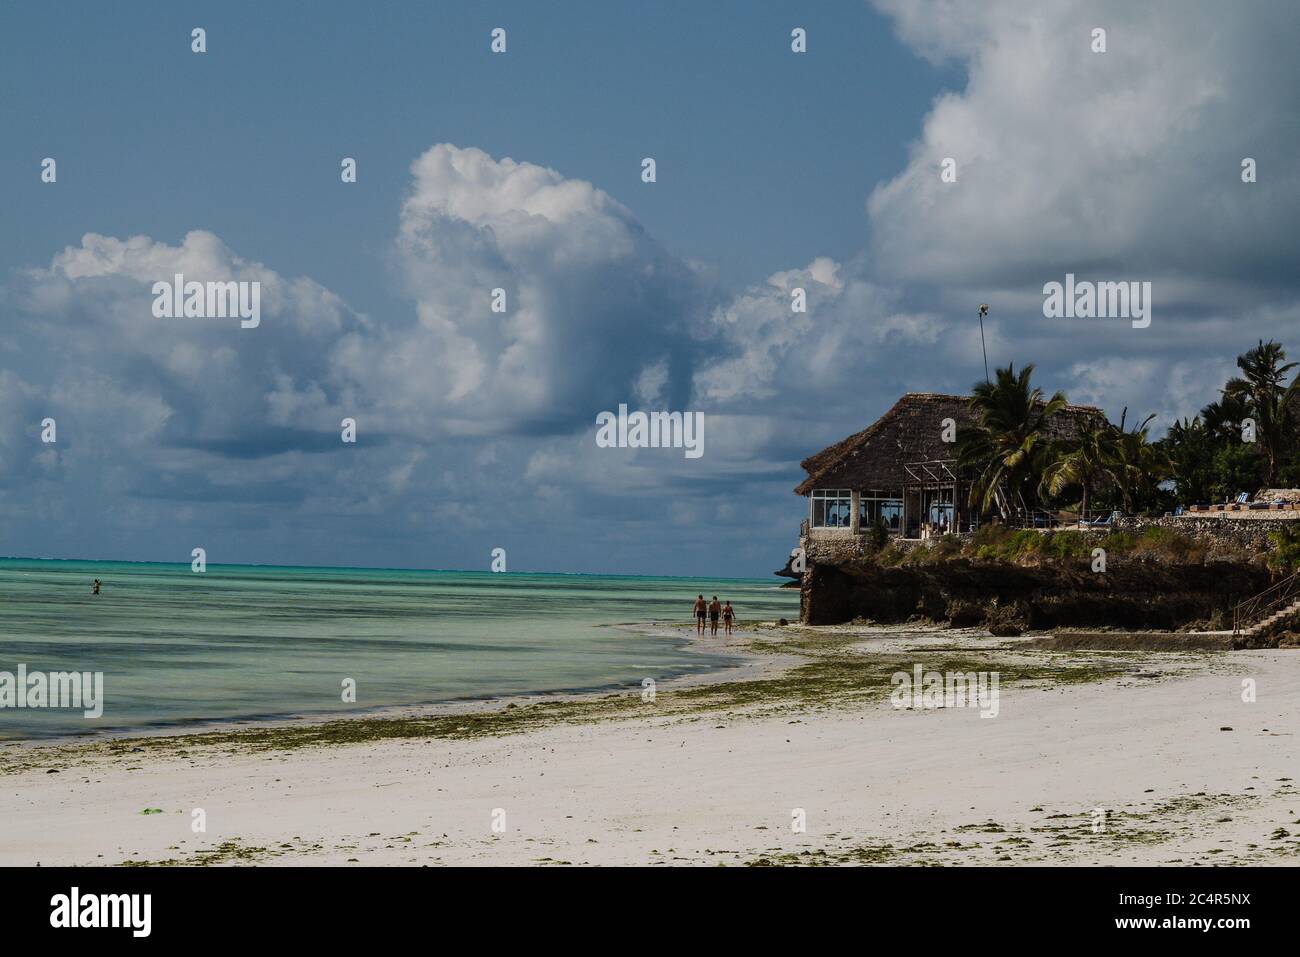 Tourists walking along Jambiani beach with a beachfront hotel nearby, in Zanzibar, Tanzania Stock Photo